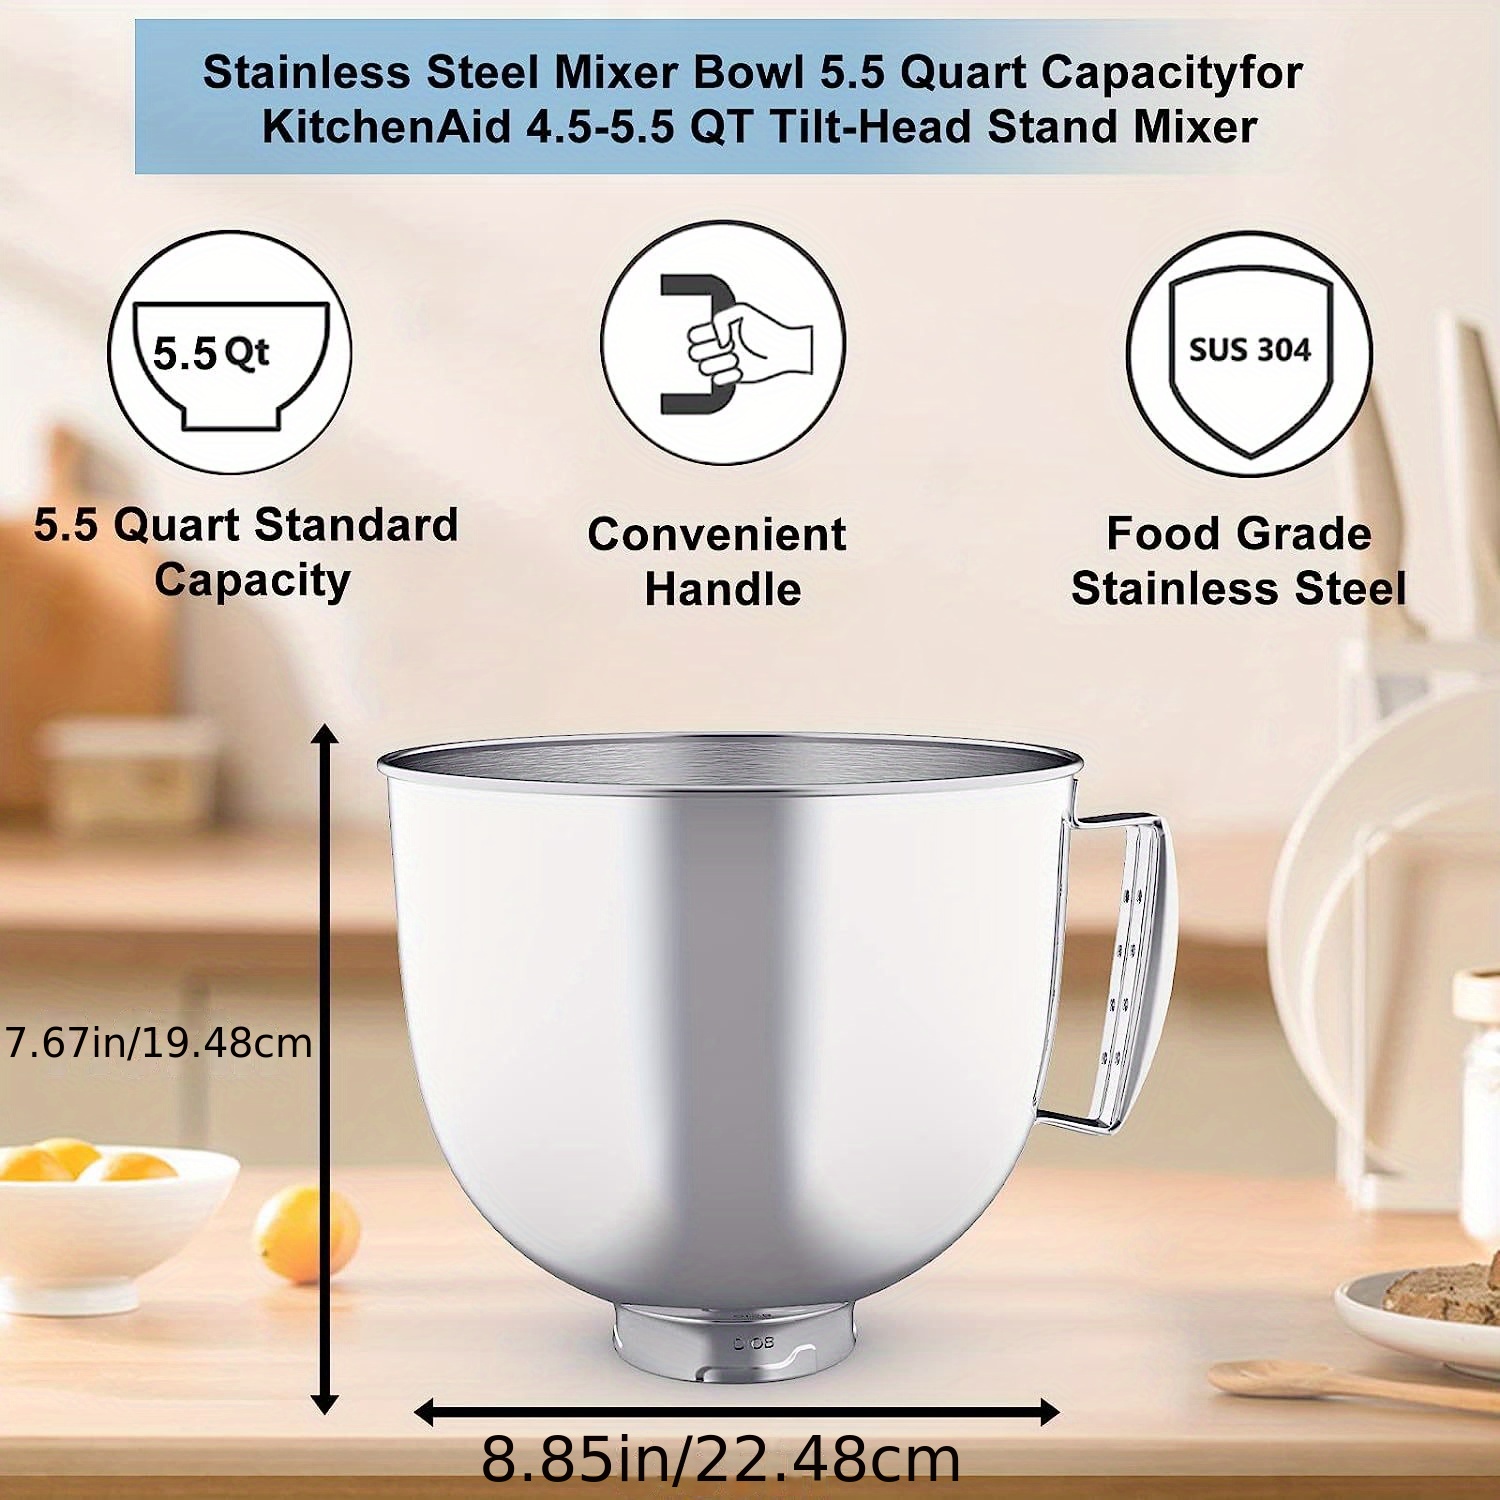  5.5 Quart Stainless Steel Mixer Bowl for KitchenAid